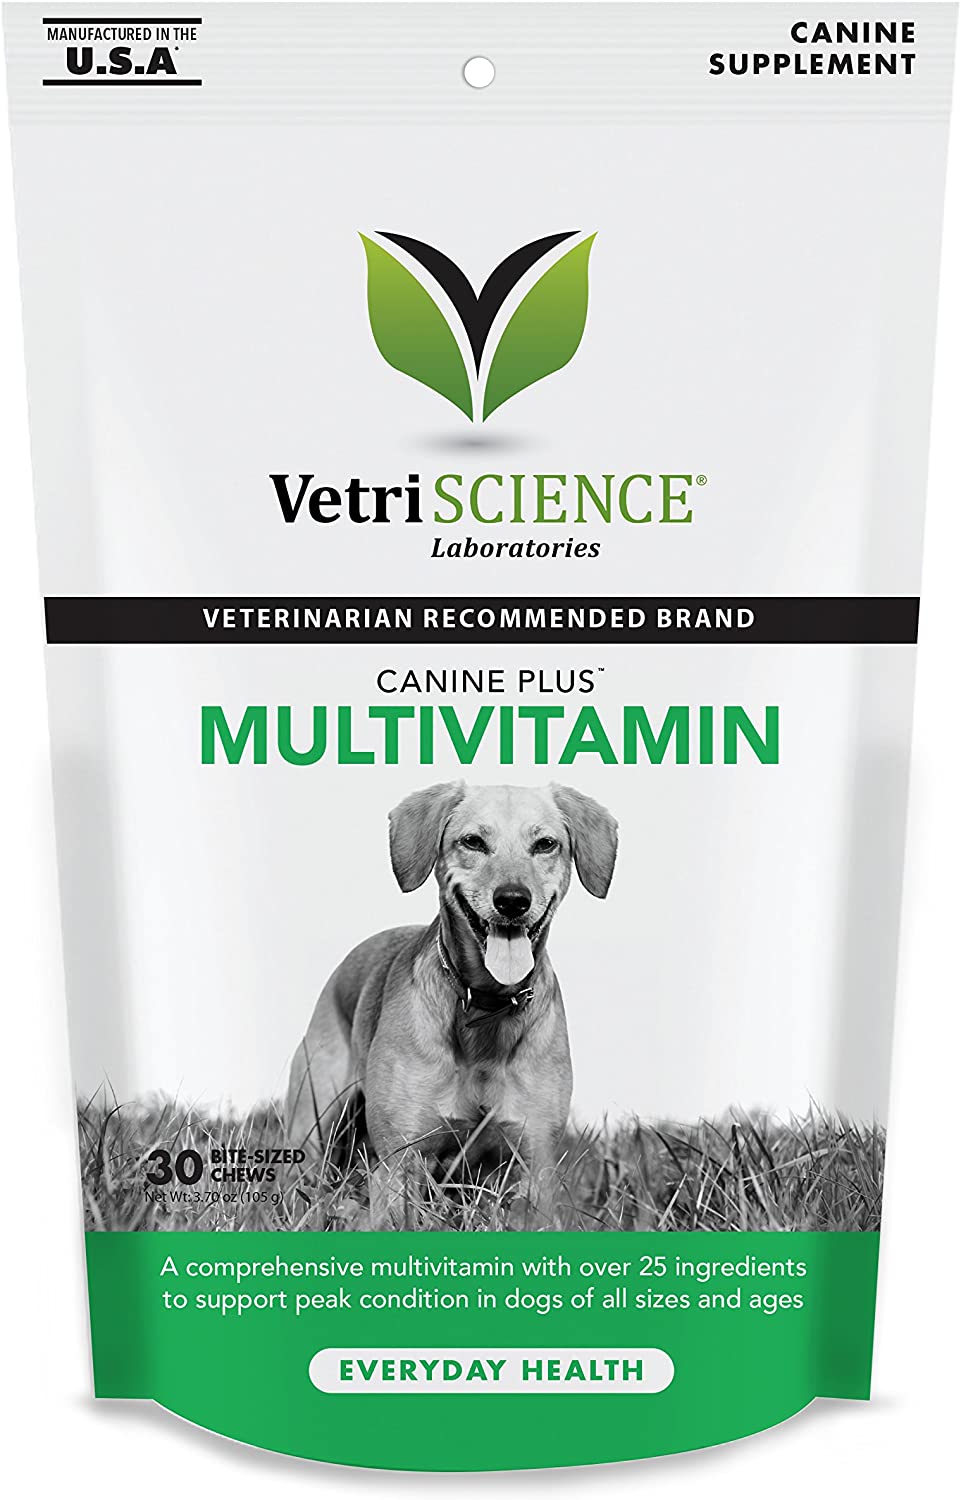 VetriScience Laboratories Canine Plus MultiVitamin for Dogs